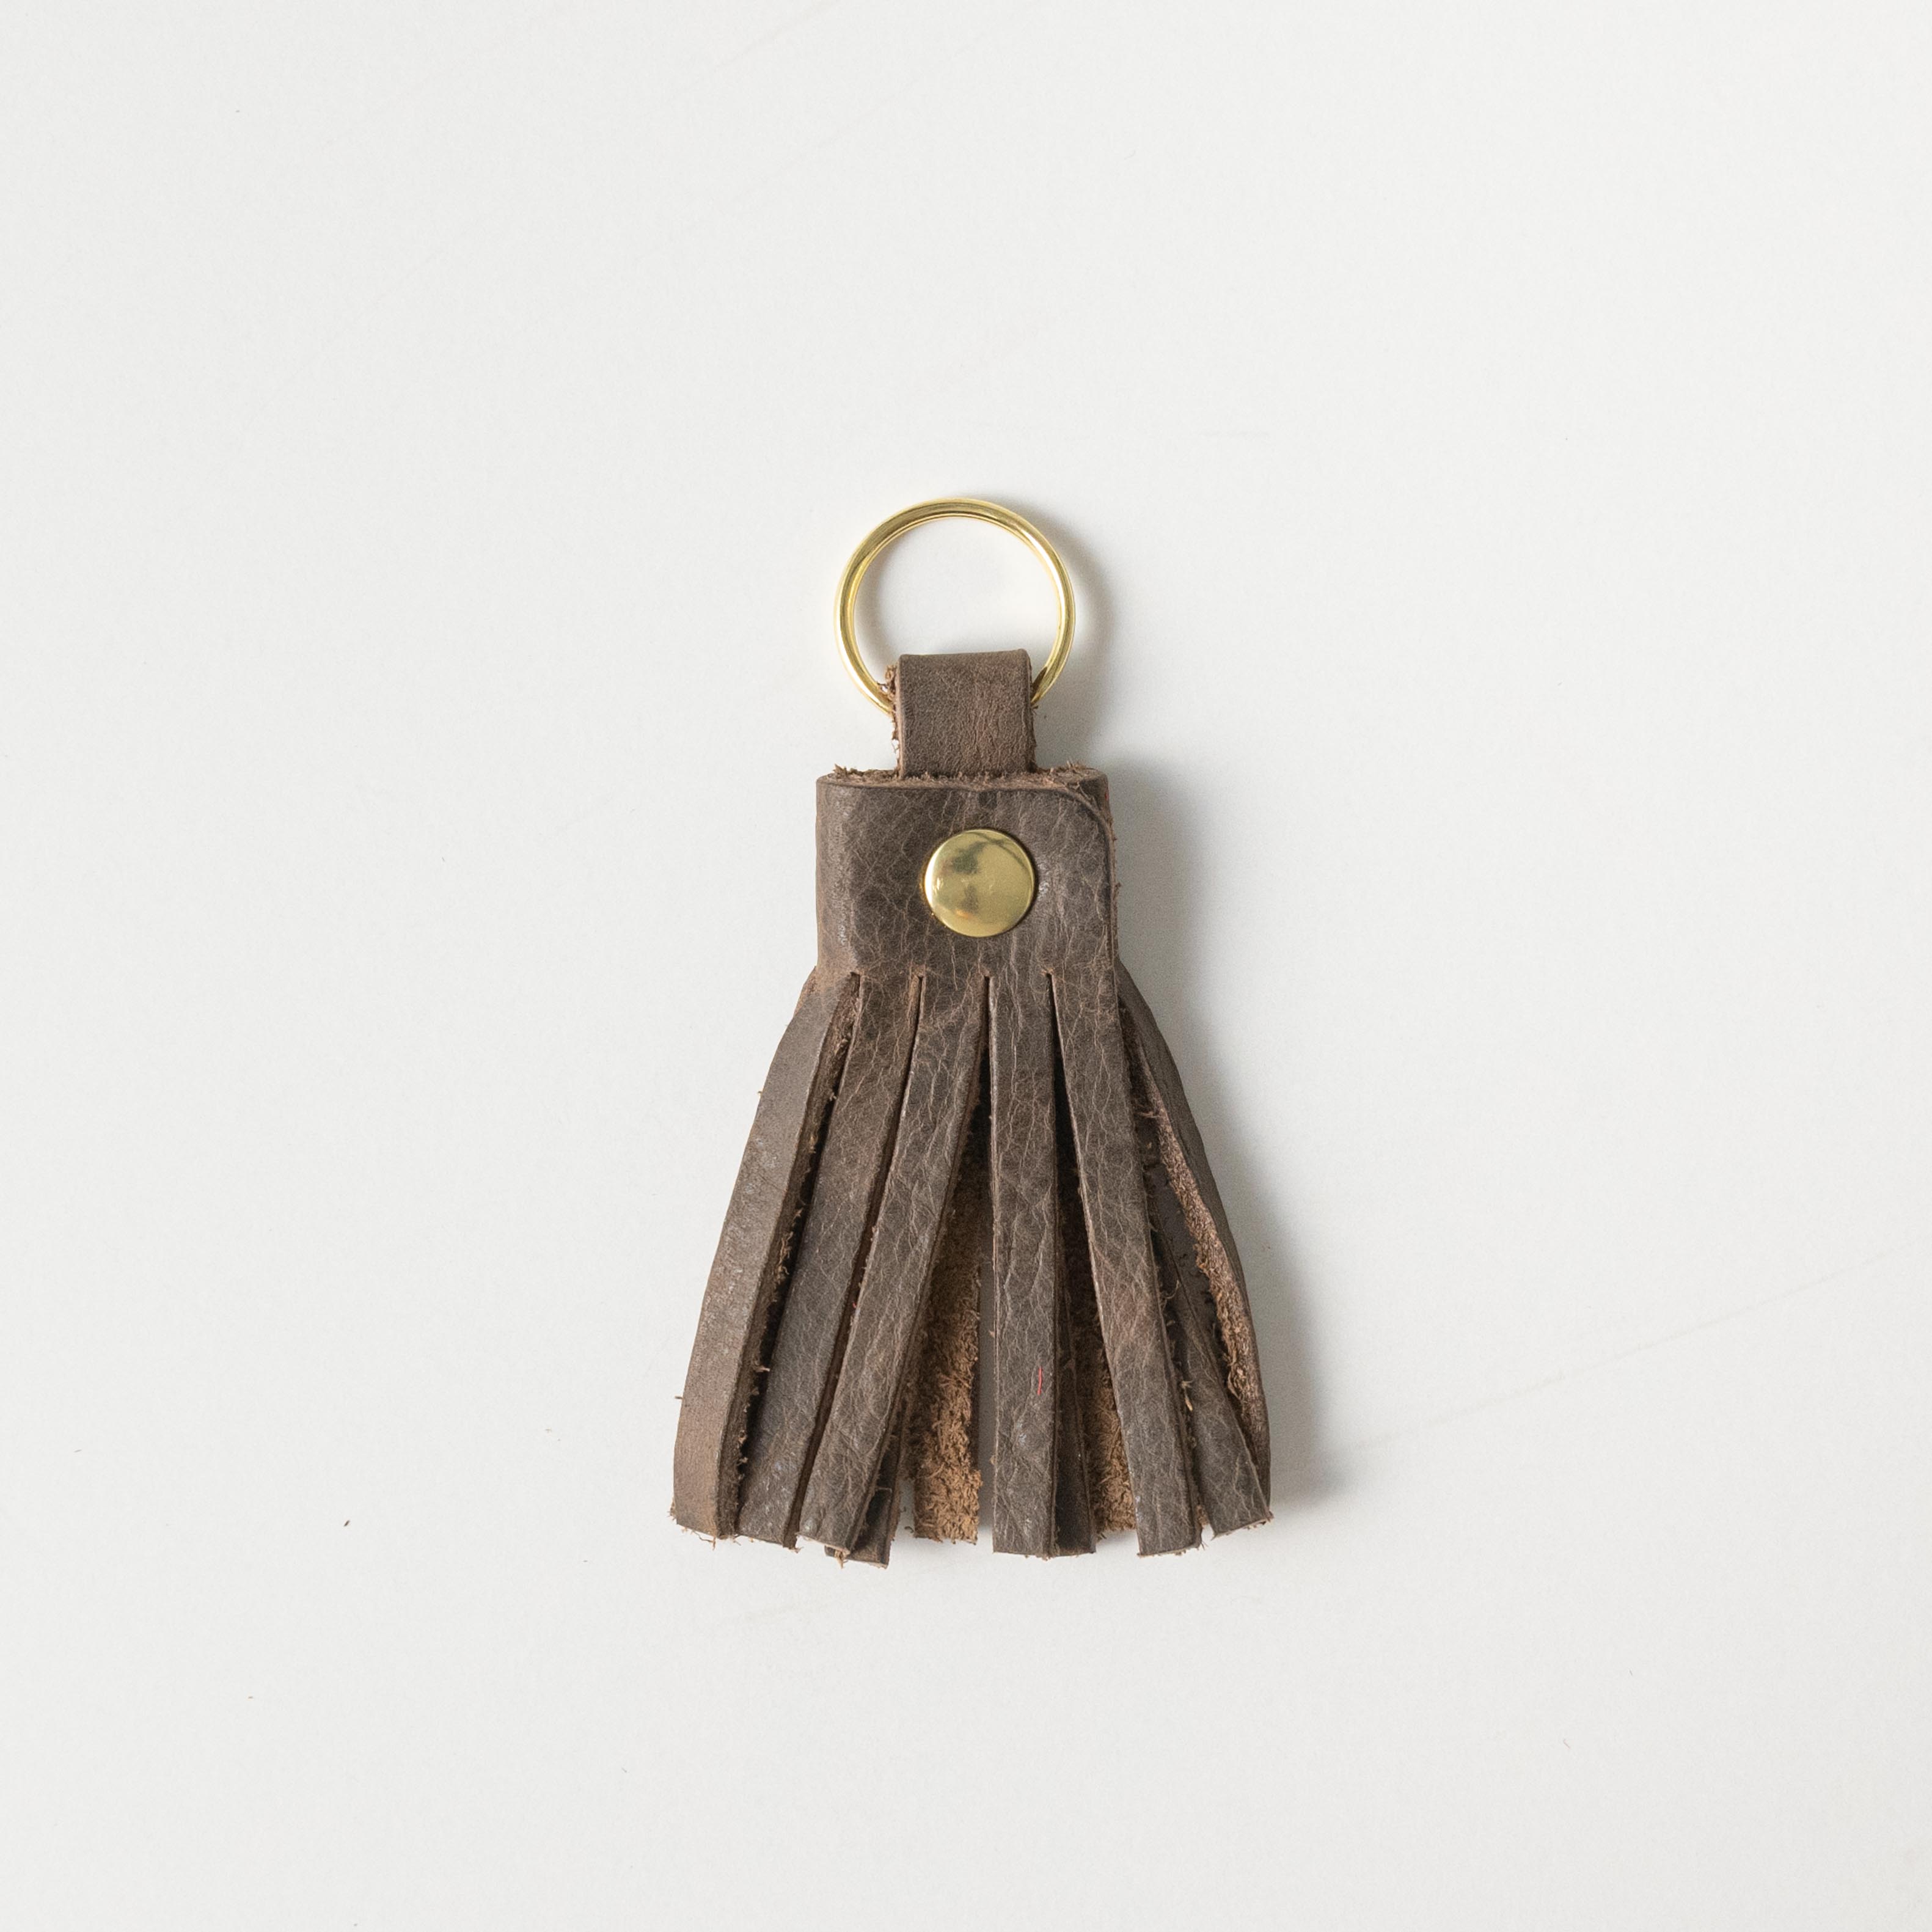 Metallic Leather tassel, single leather purse charm, leather key ring,  leather zipper pull, tassels for handbags, genuine leather key chain